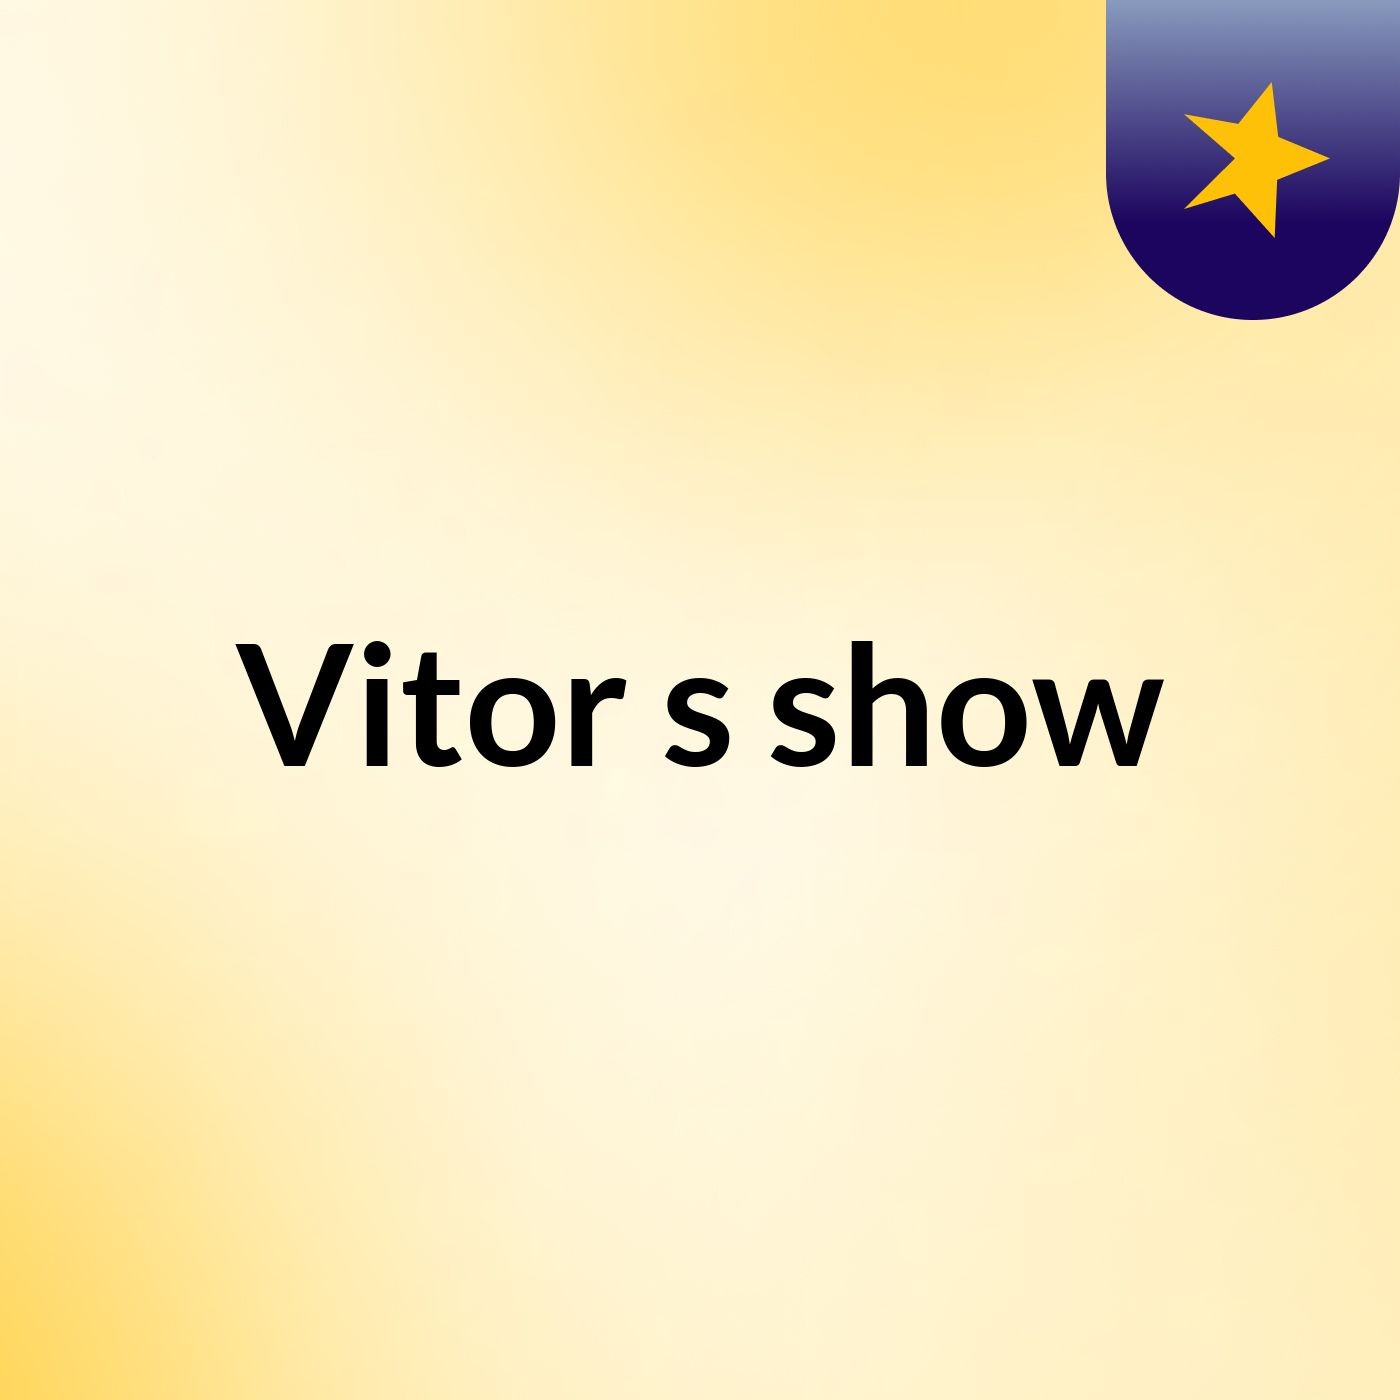 Vitor's show